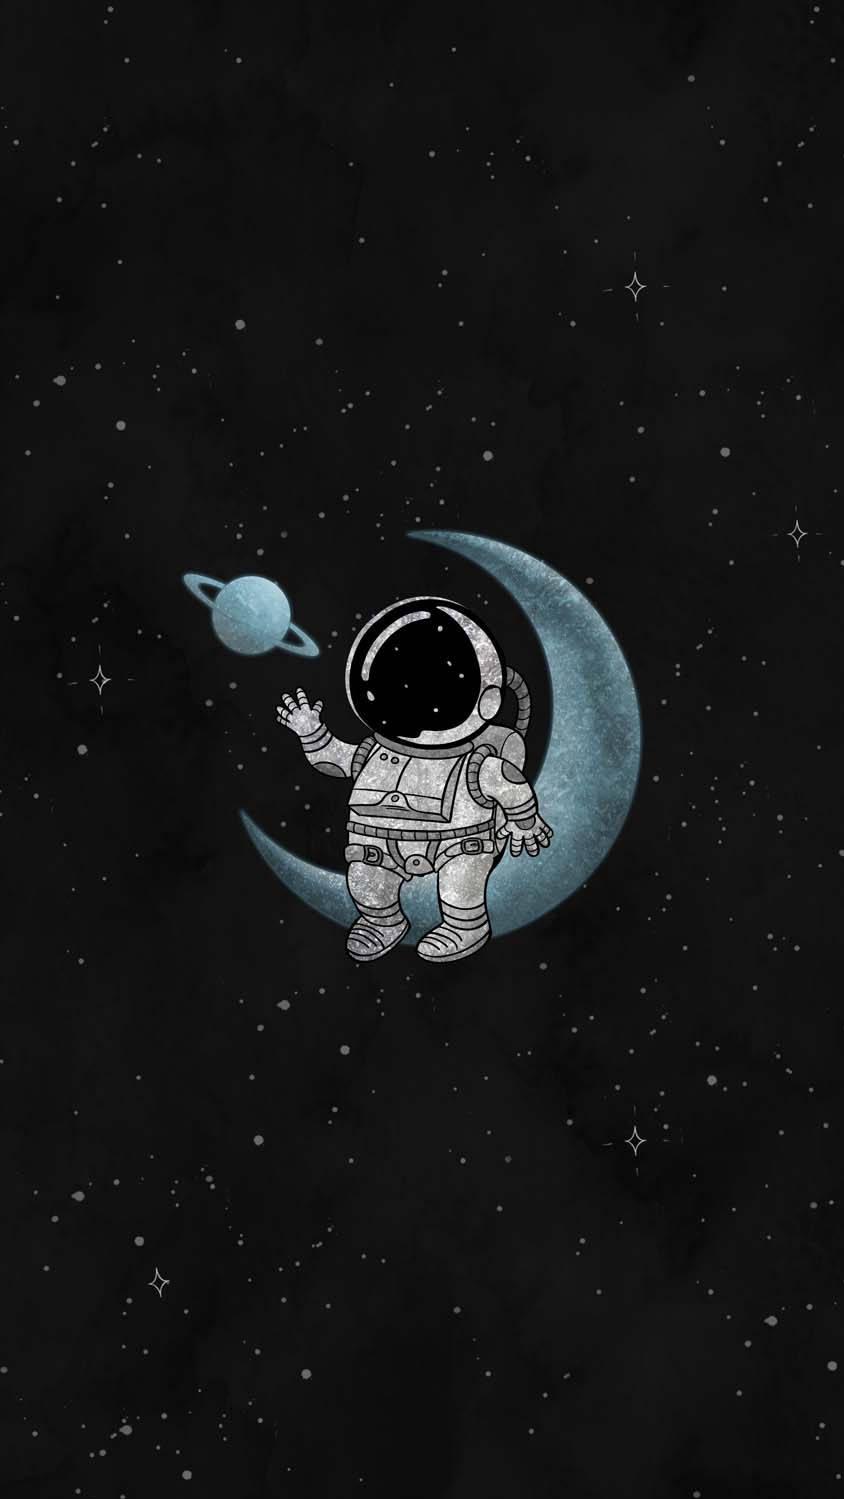 Download Cartoon Astronaut Sitting On The Moon Wallpaper